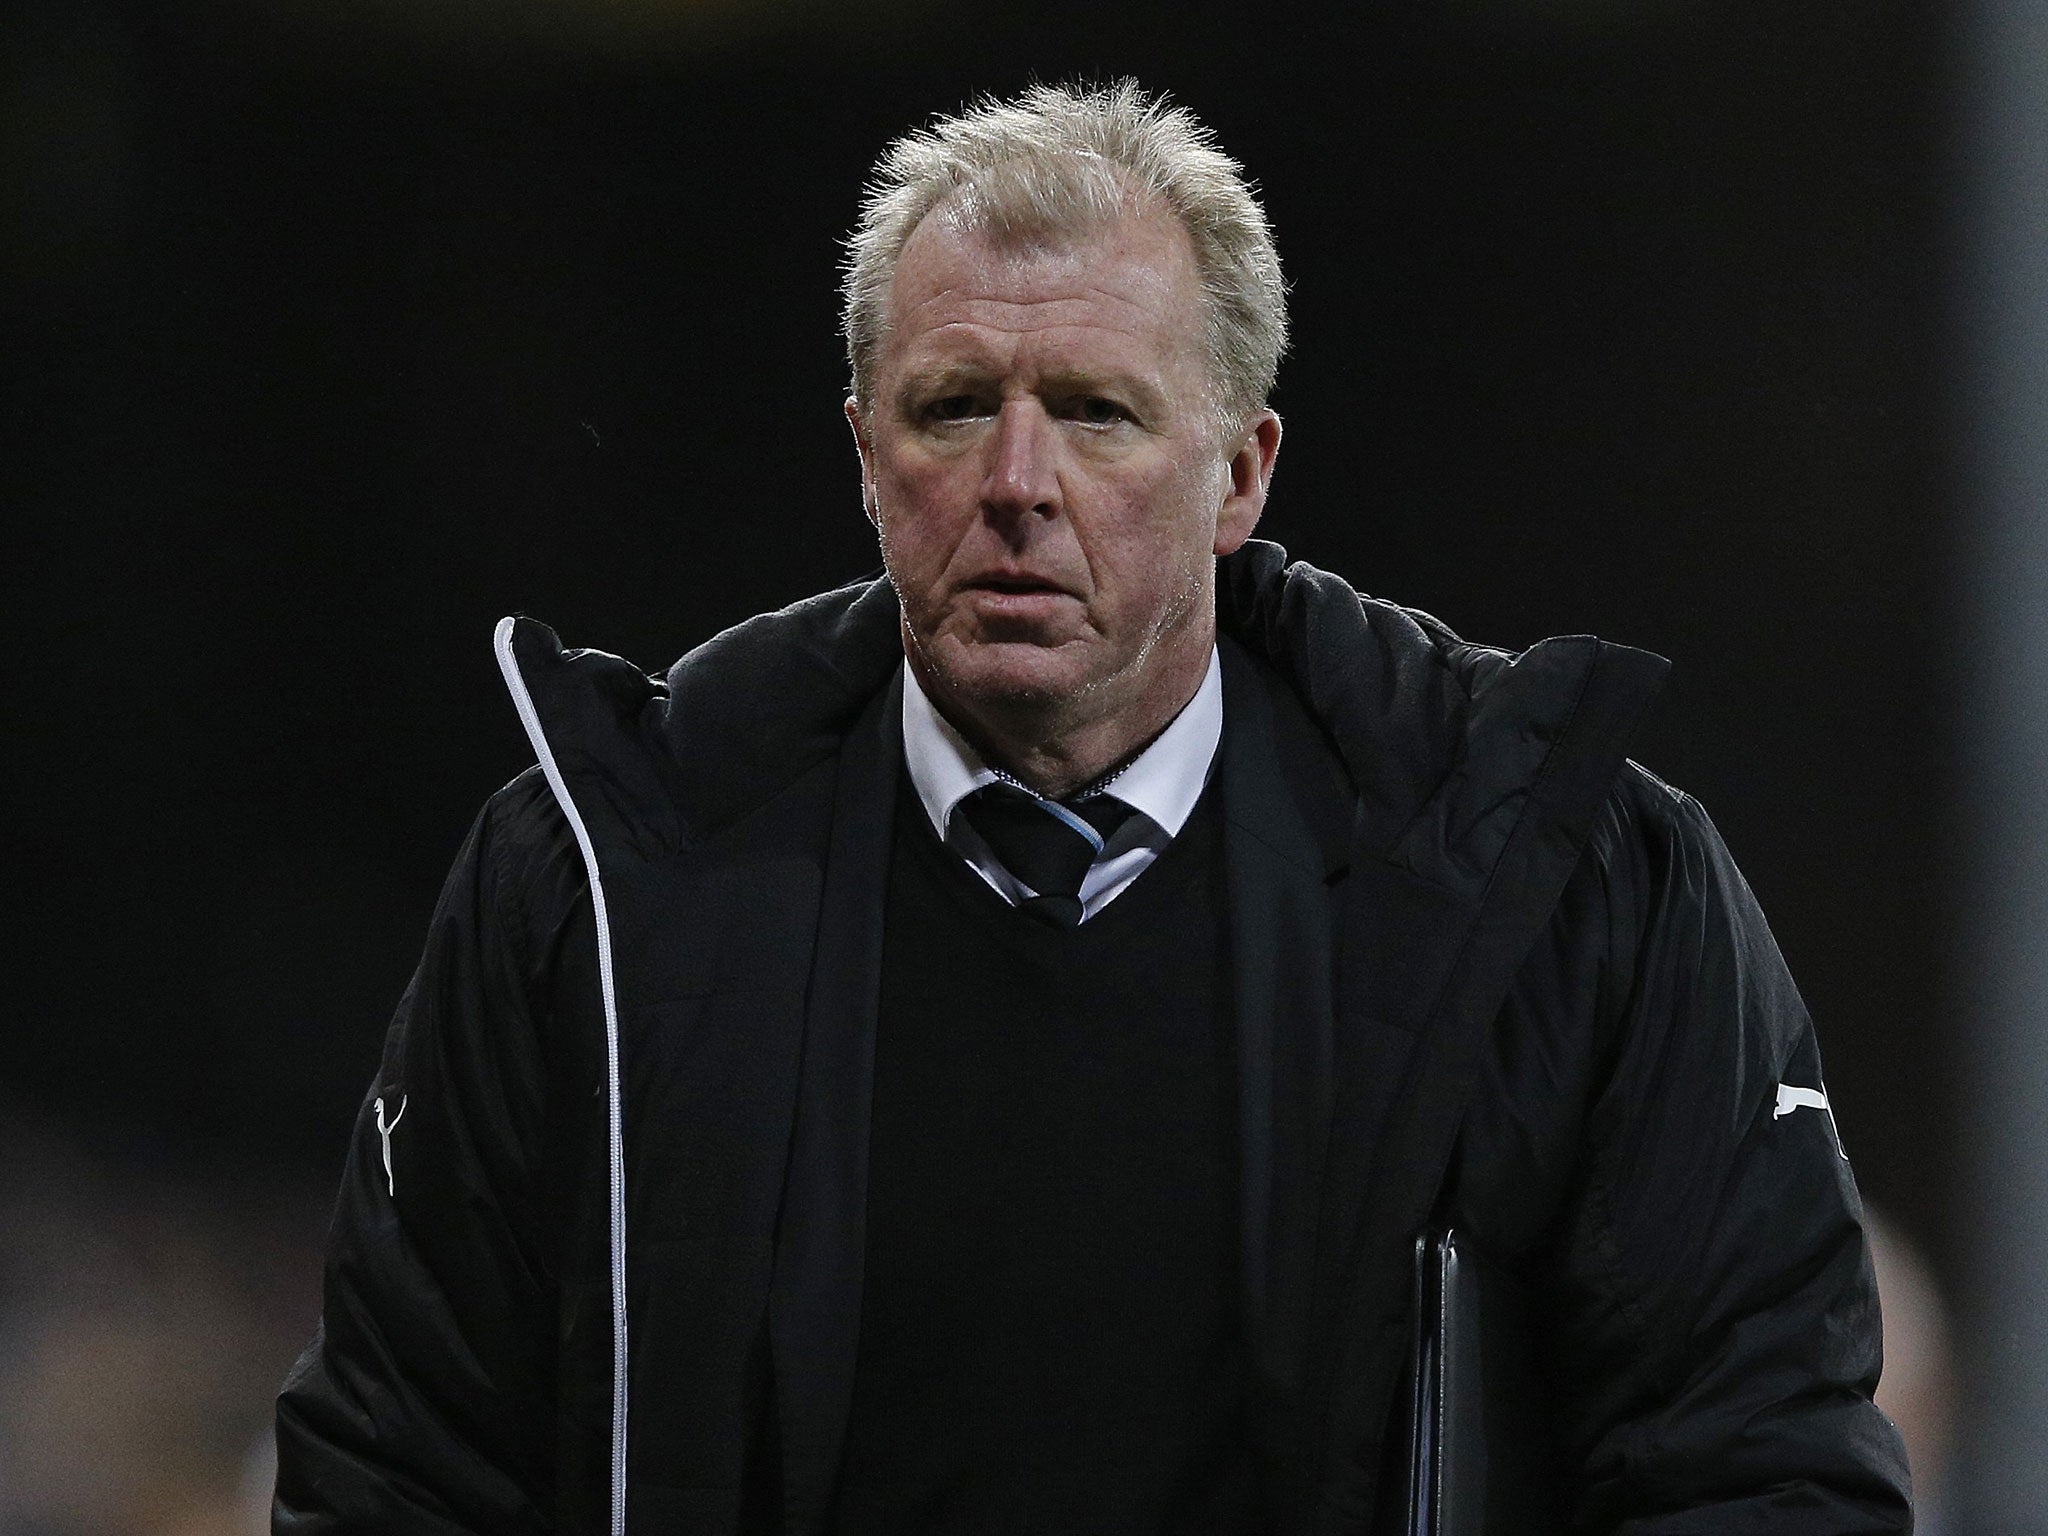 Newcastle United head coach Steve McClaren